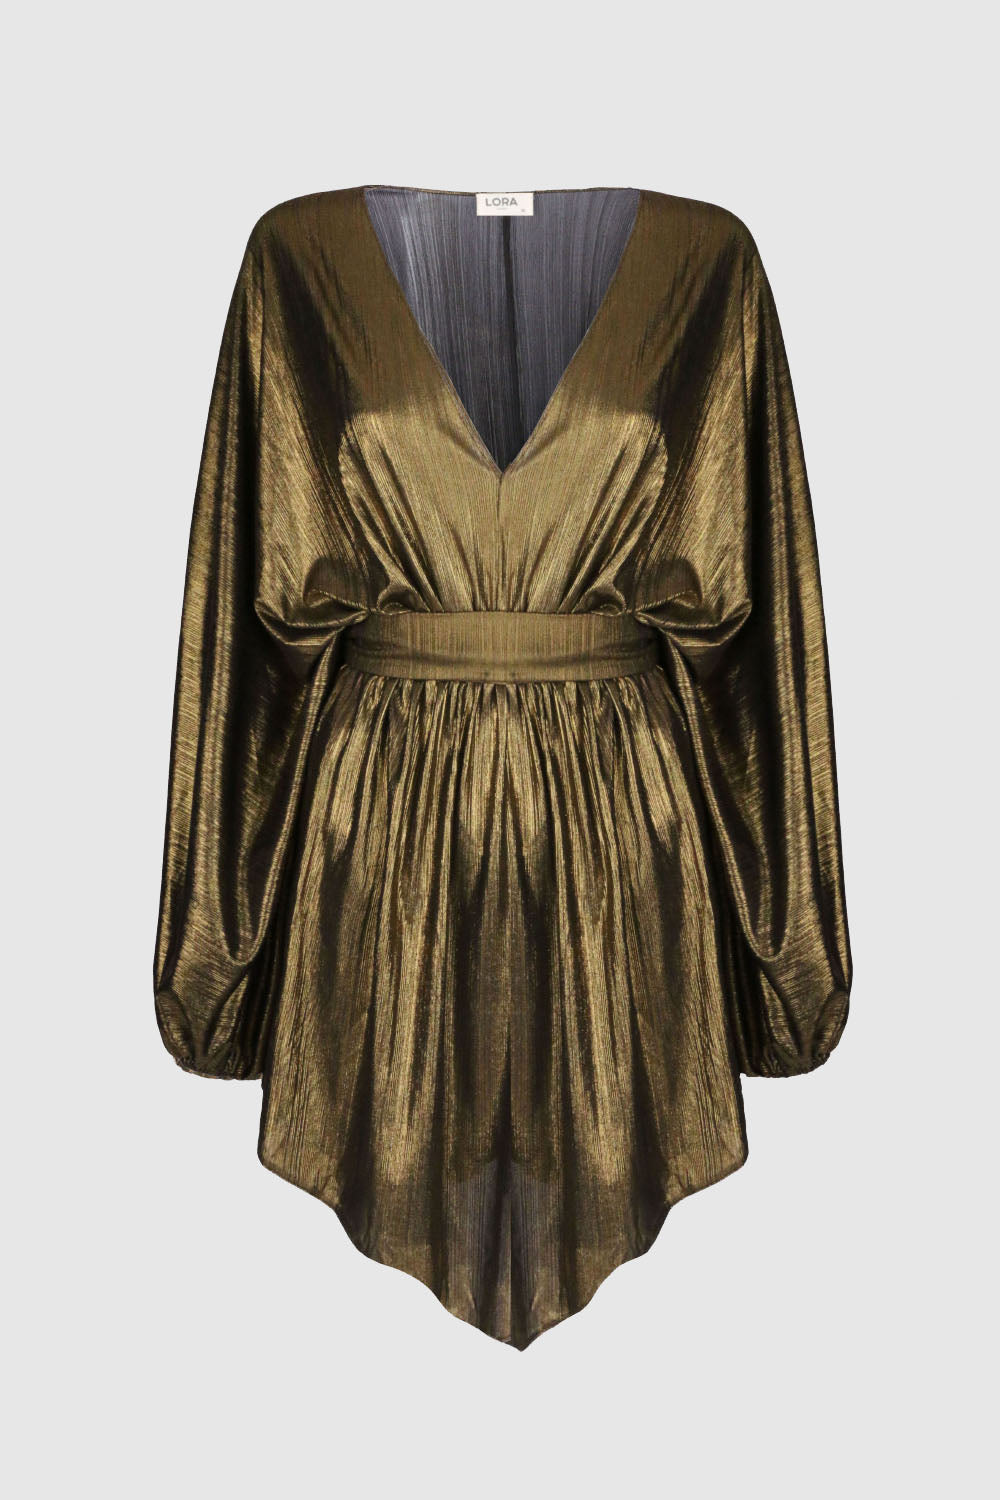 Evalina Gold Mini Dress